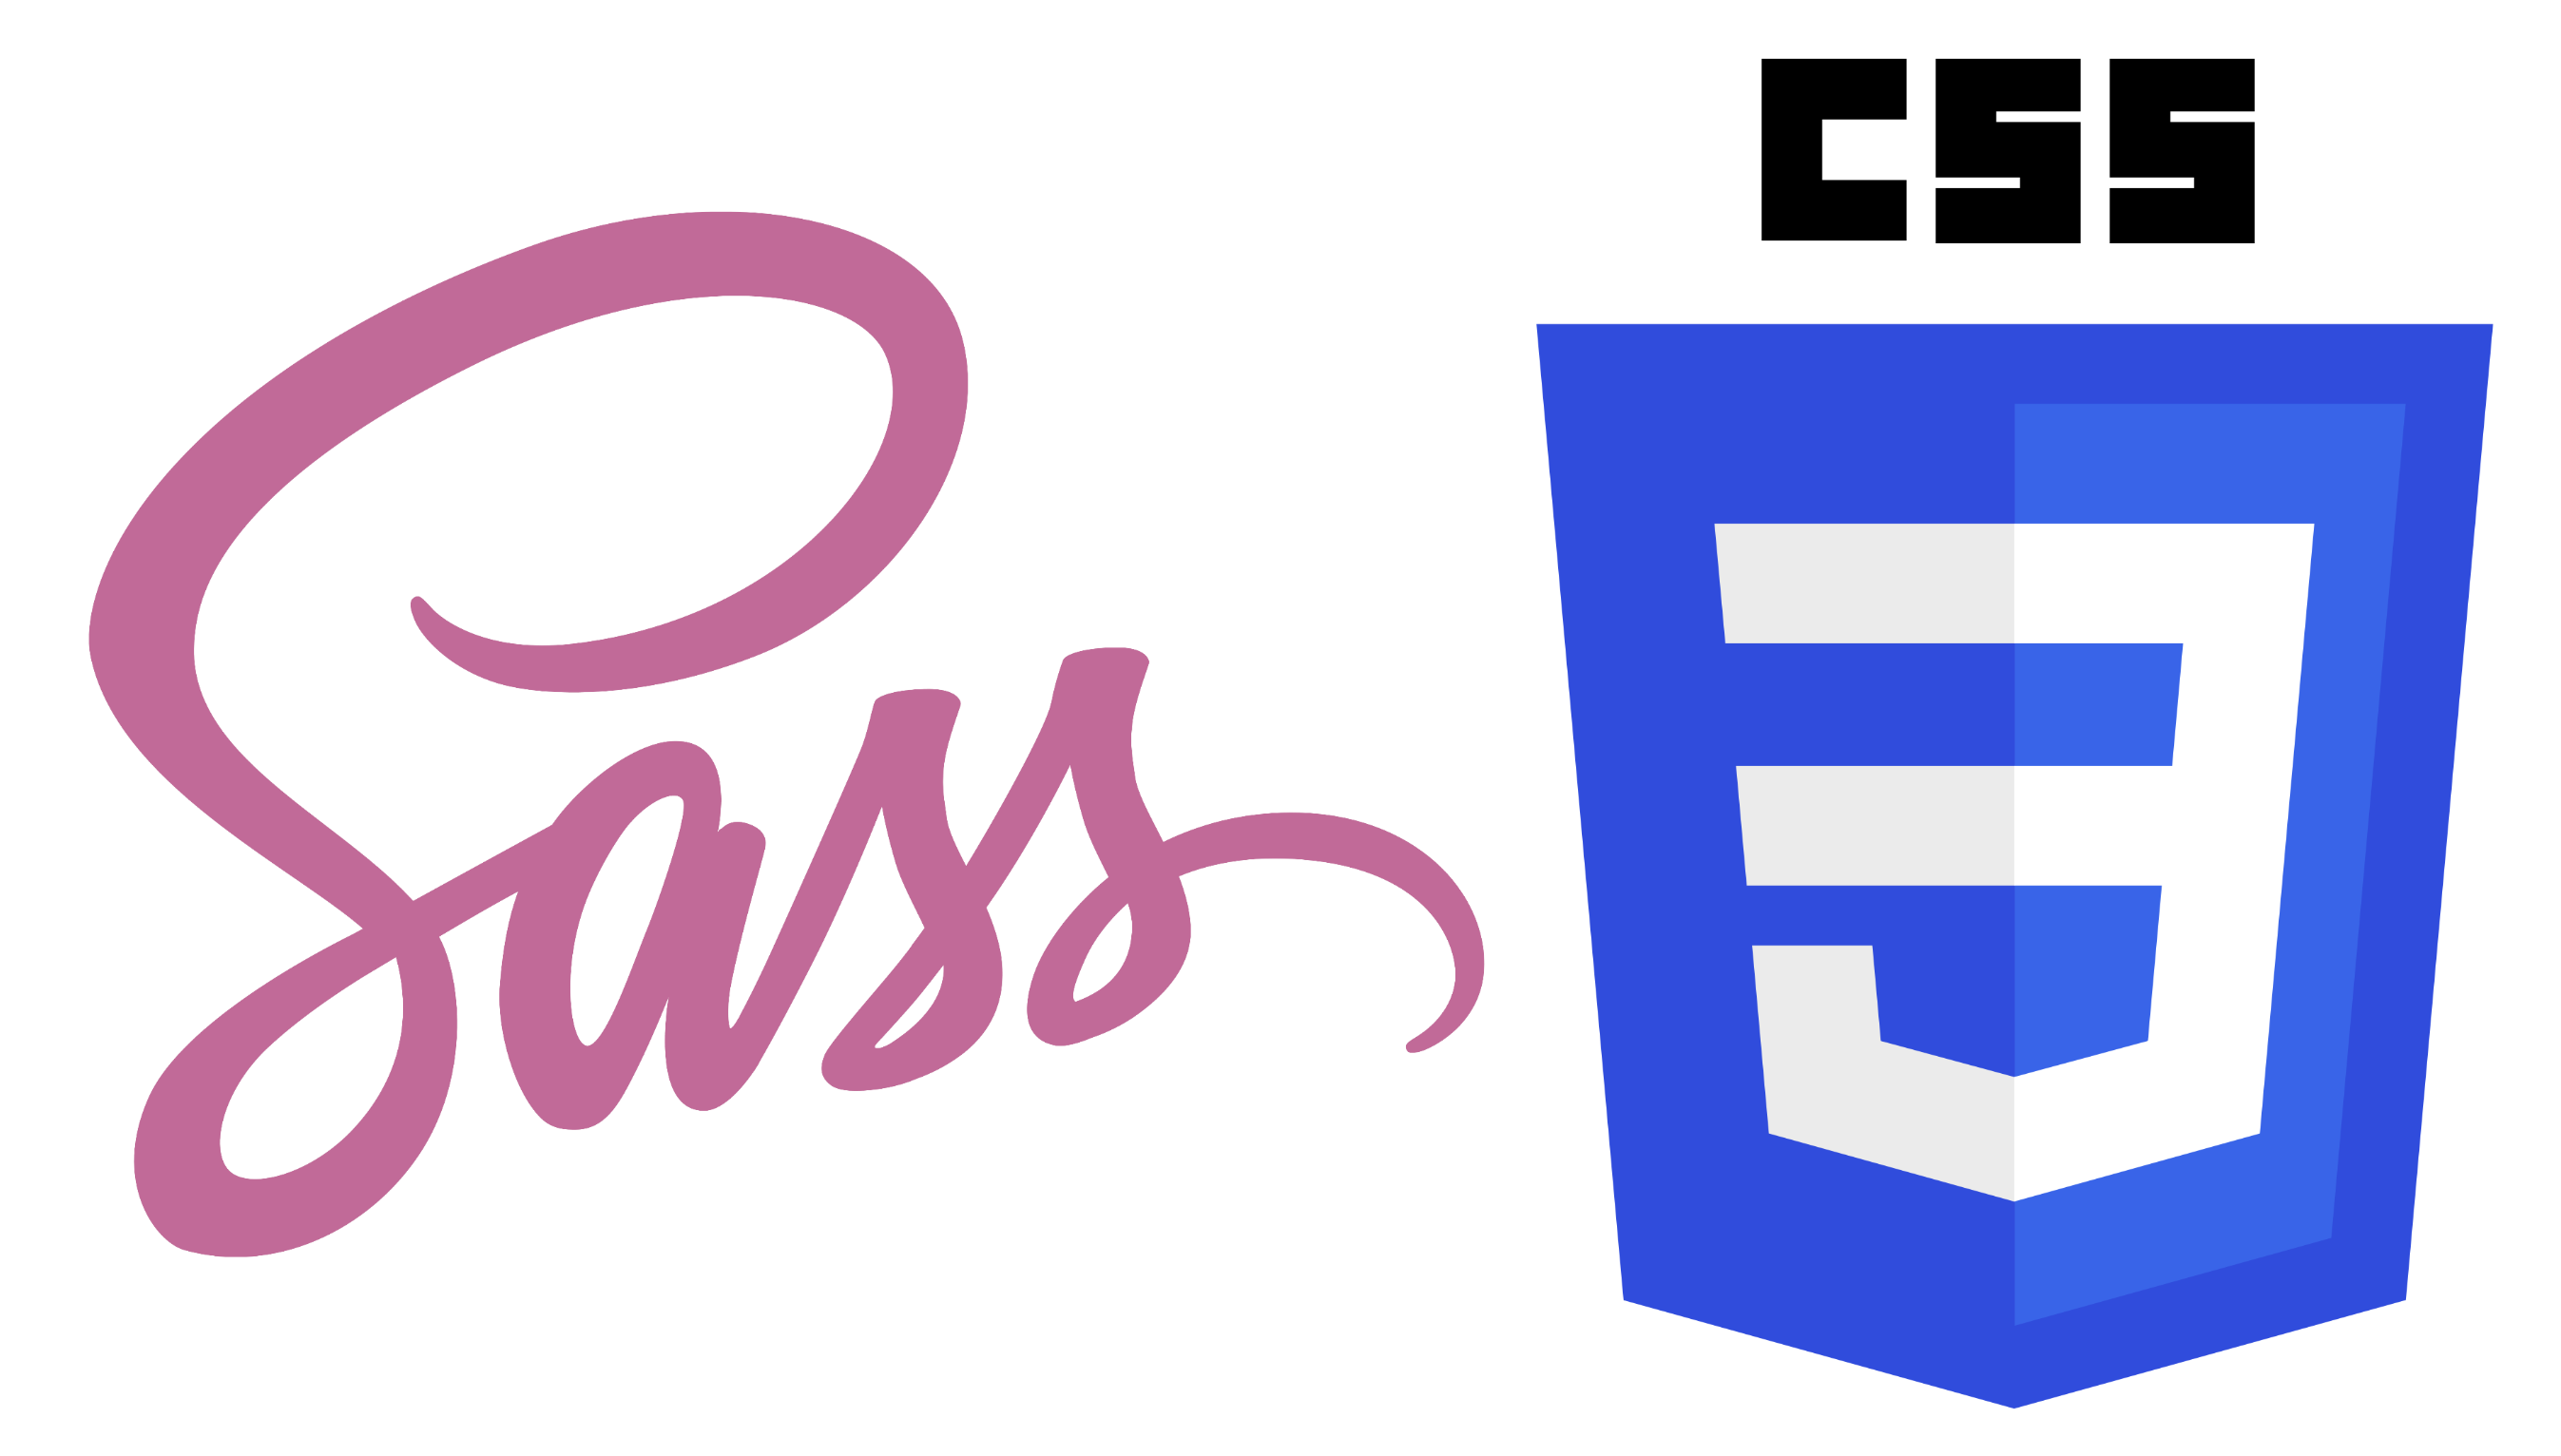 The Sass and CSS logos